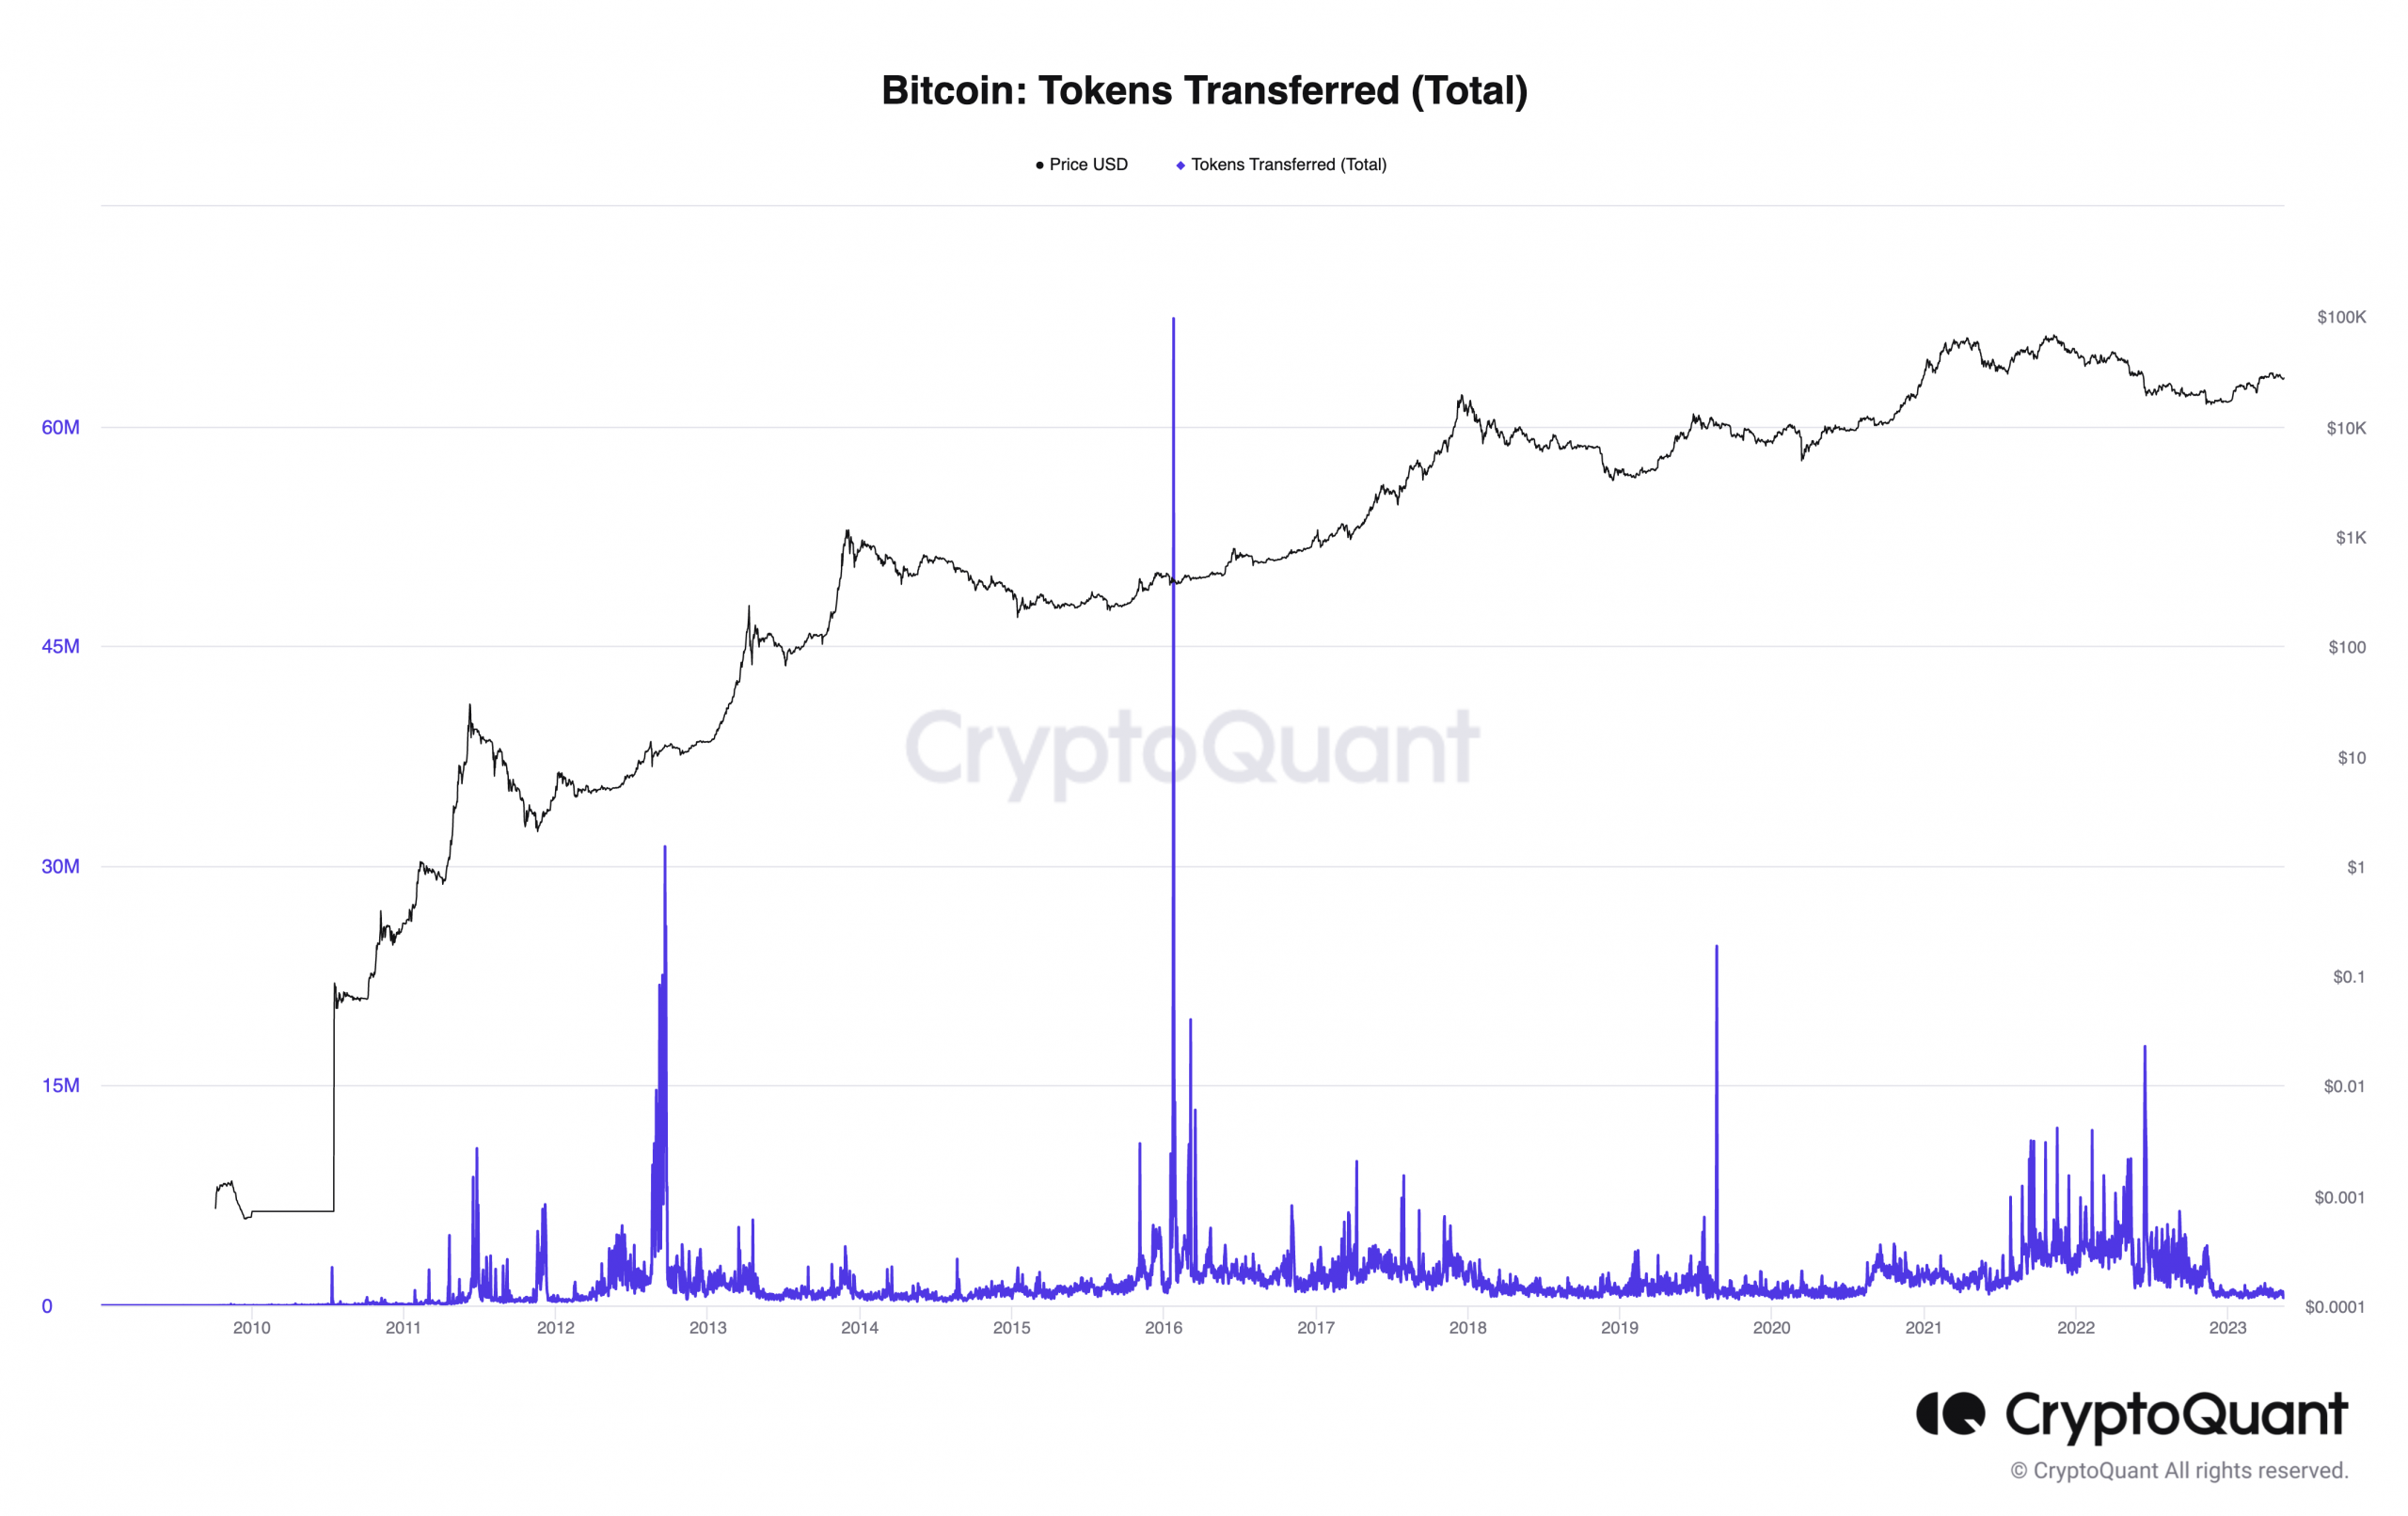 Bitcoin total tokens transferred